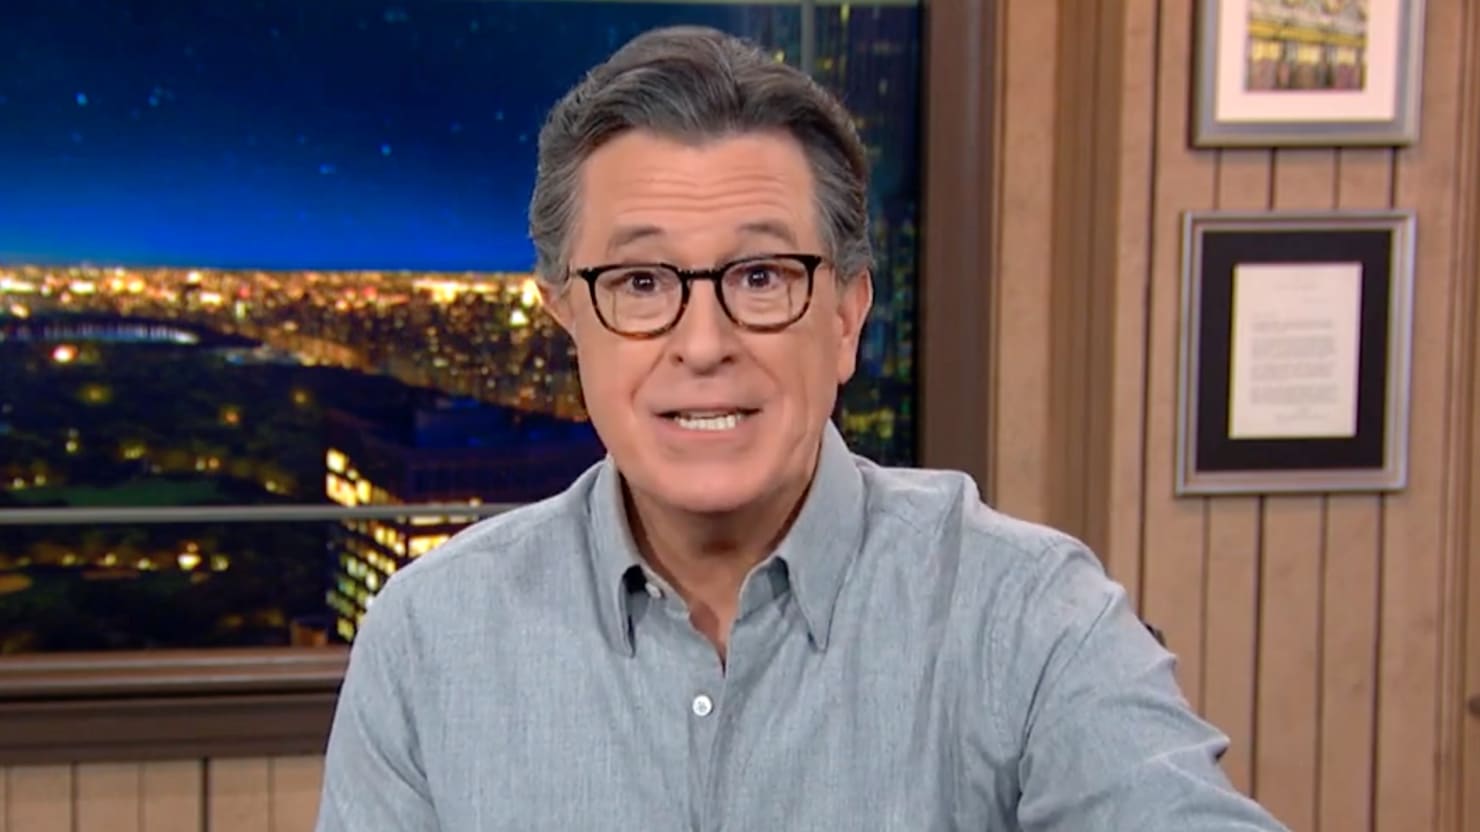 Stephen Colbert mocks Trump’s ‘incredibly sad’ vaccine statement